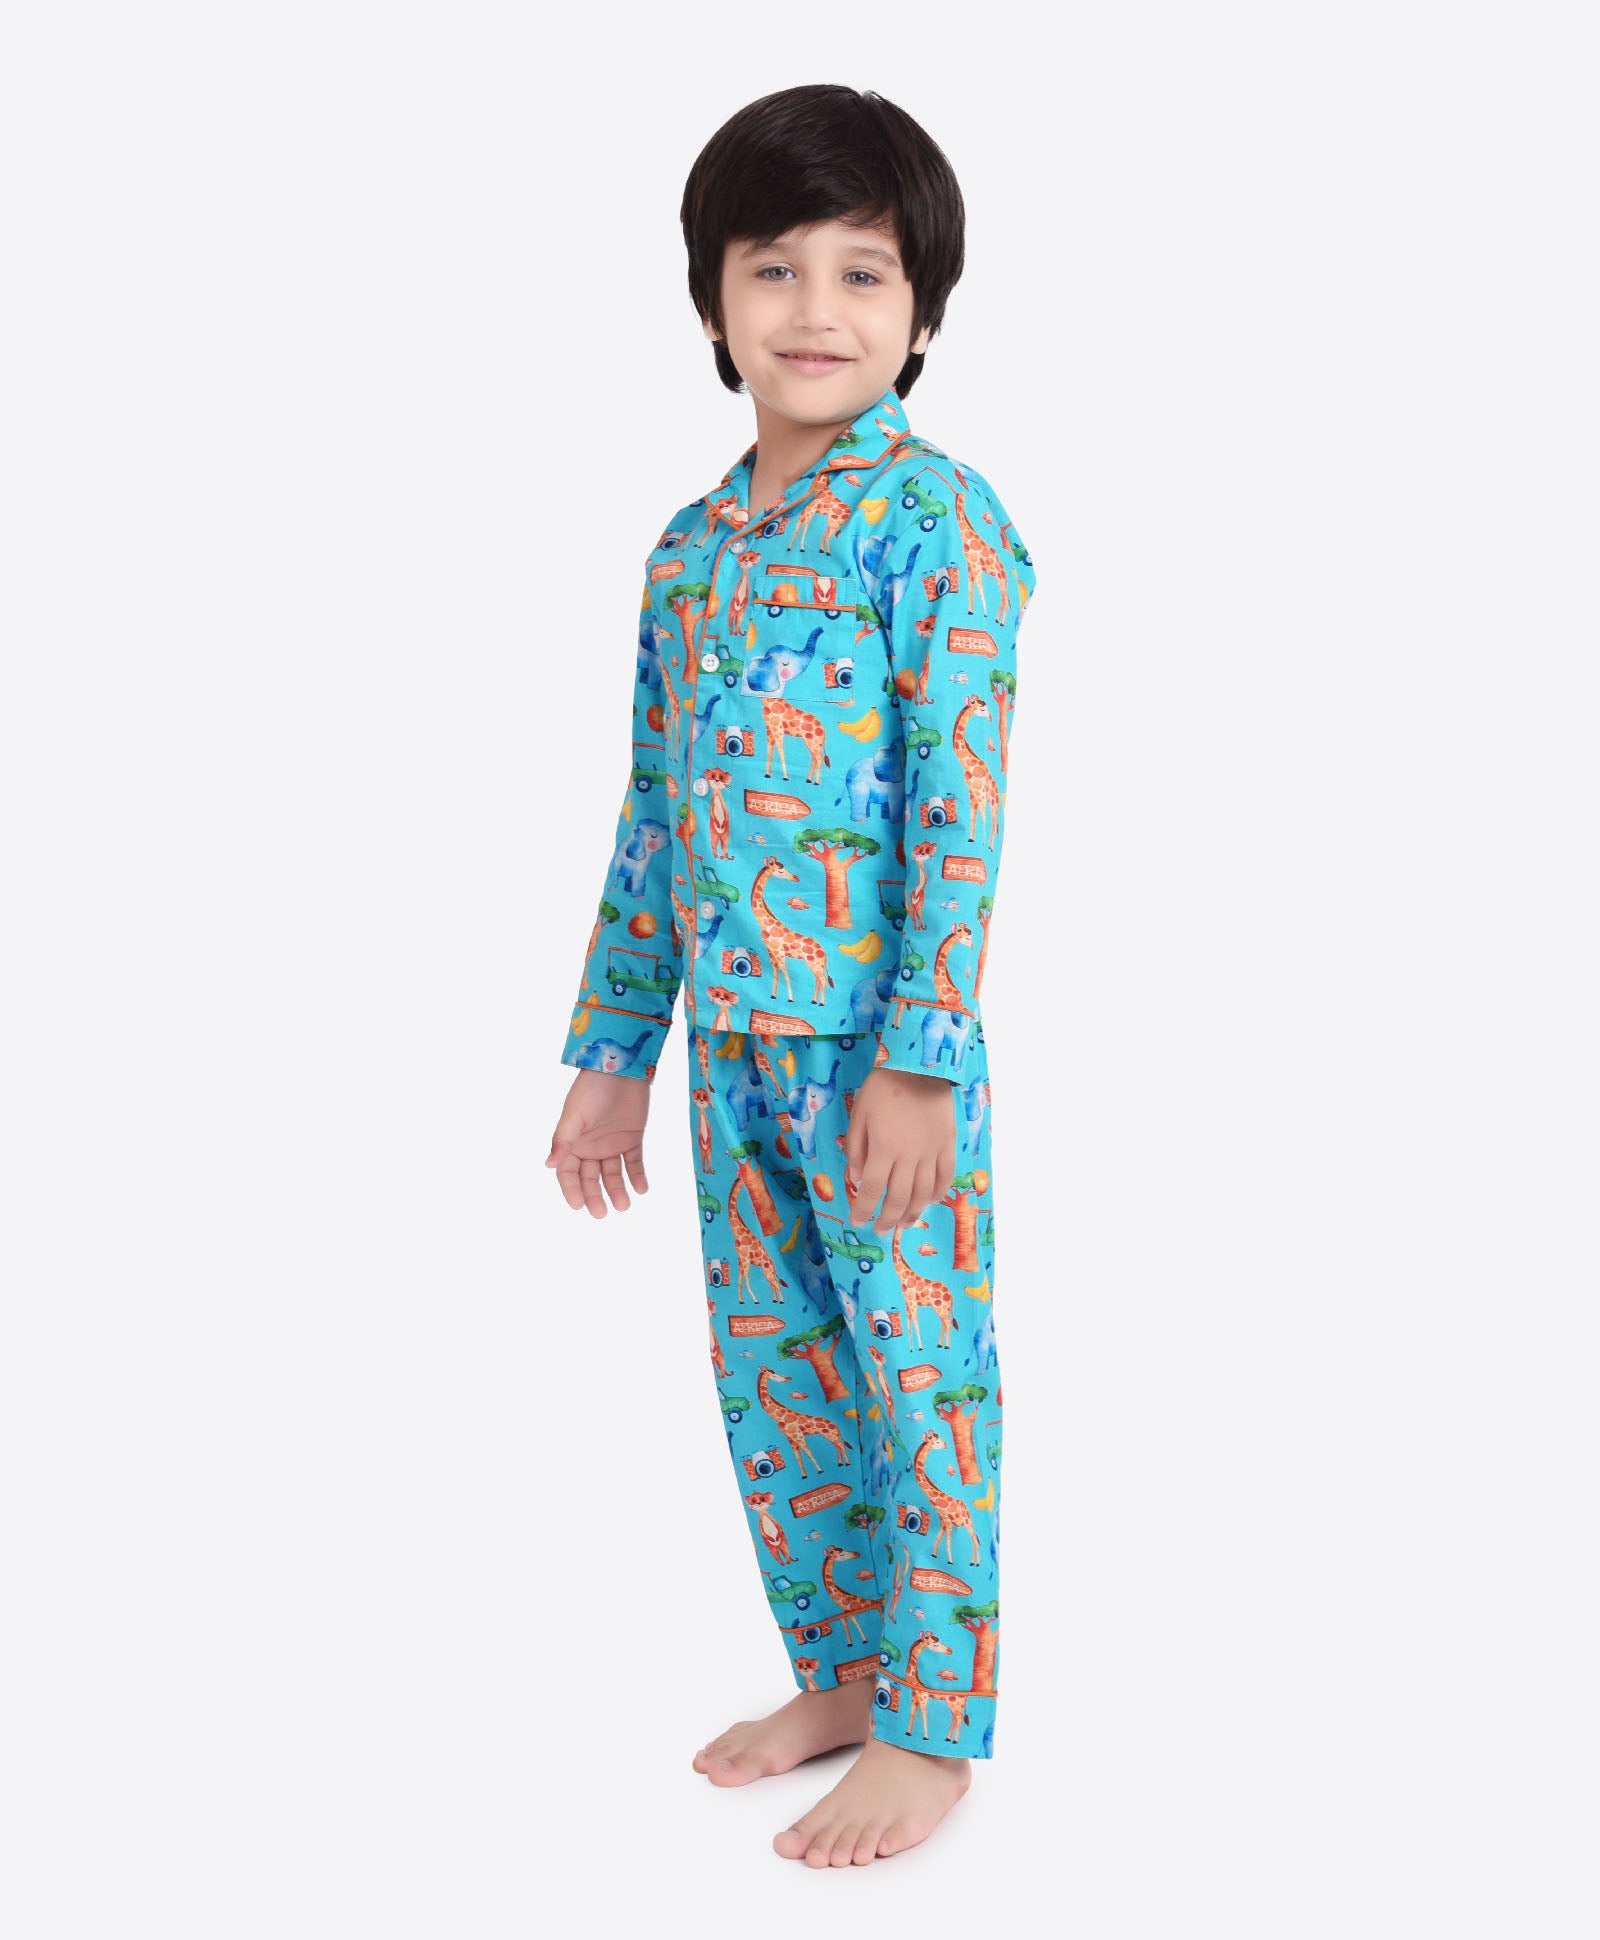 Premium Silk night wear nightwear night suit nightsuit night dress pajamas  nighty for kids baby girl (maroon)